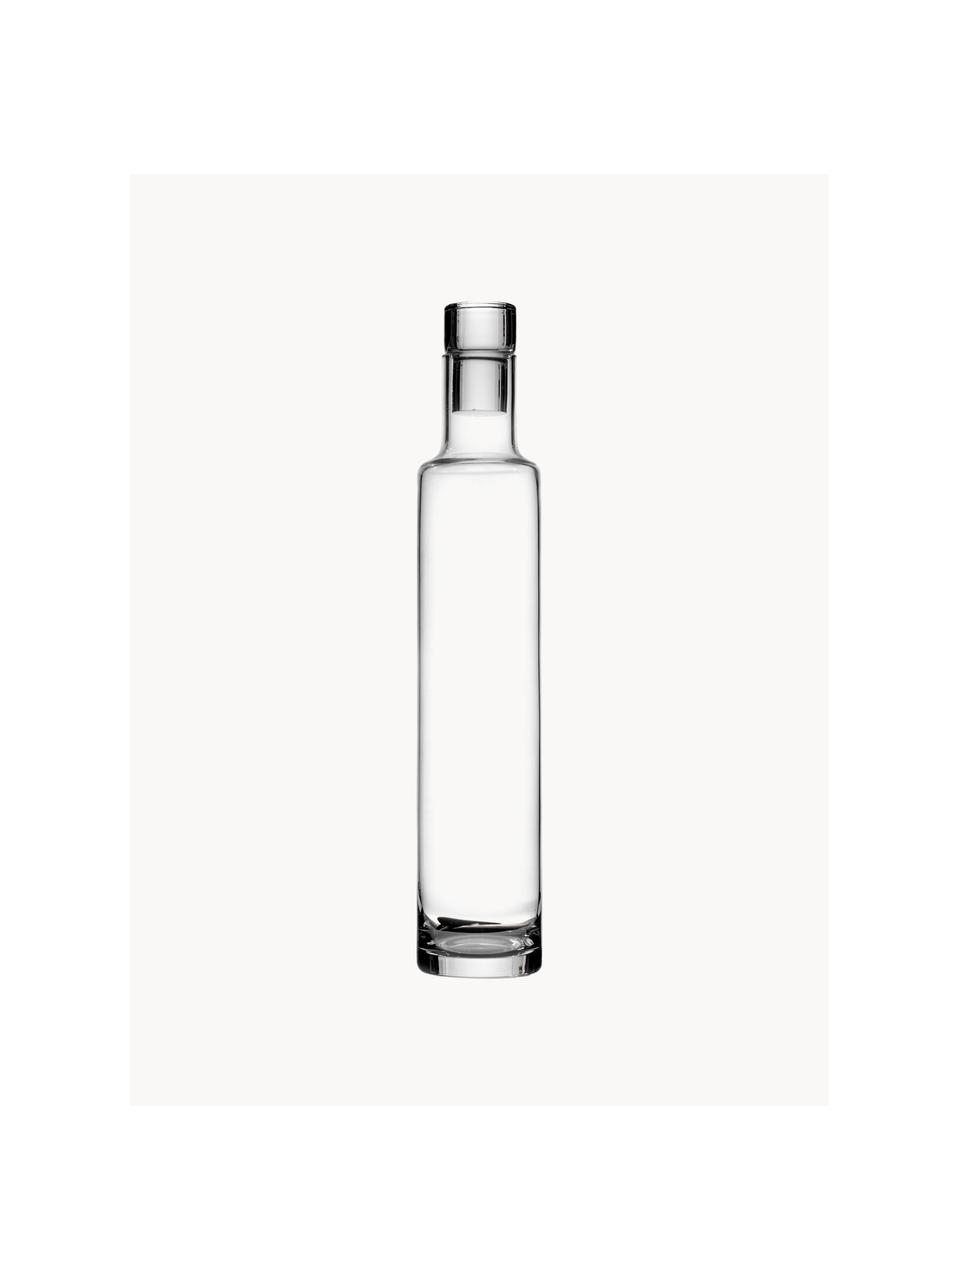 Handgefertigte Wasserkaraffe Aix, 950 ml, Kristallglas, Transparent, 950 ml